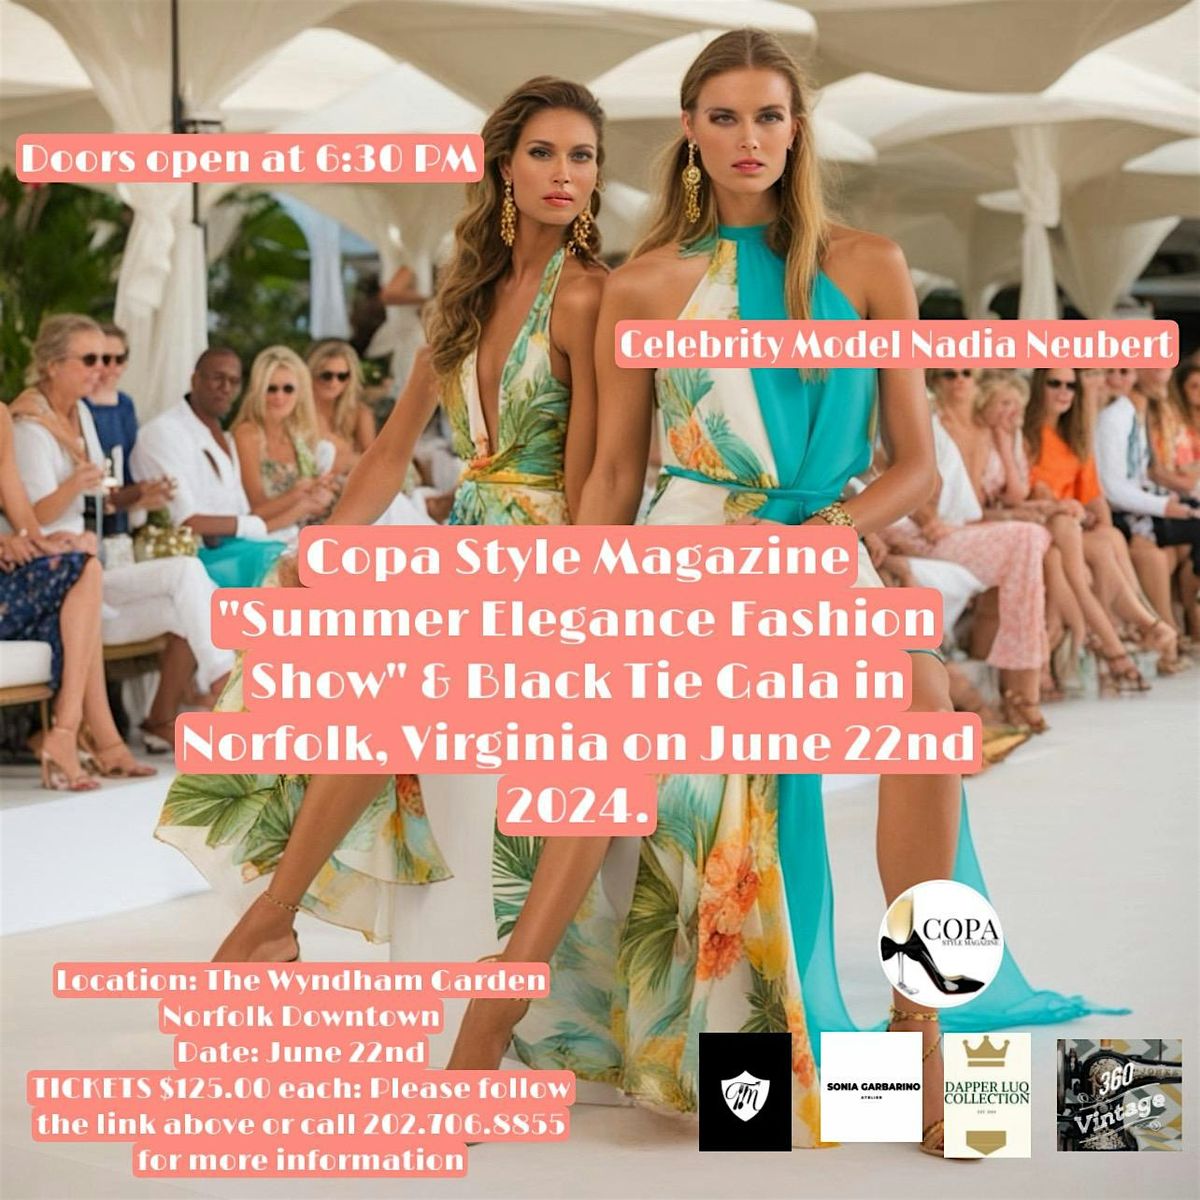 Copa Style Magazine "Summer Elegance Fashion Show" & Black Tie Gala